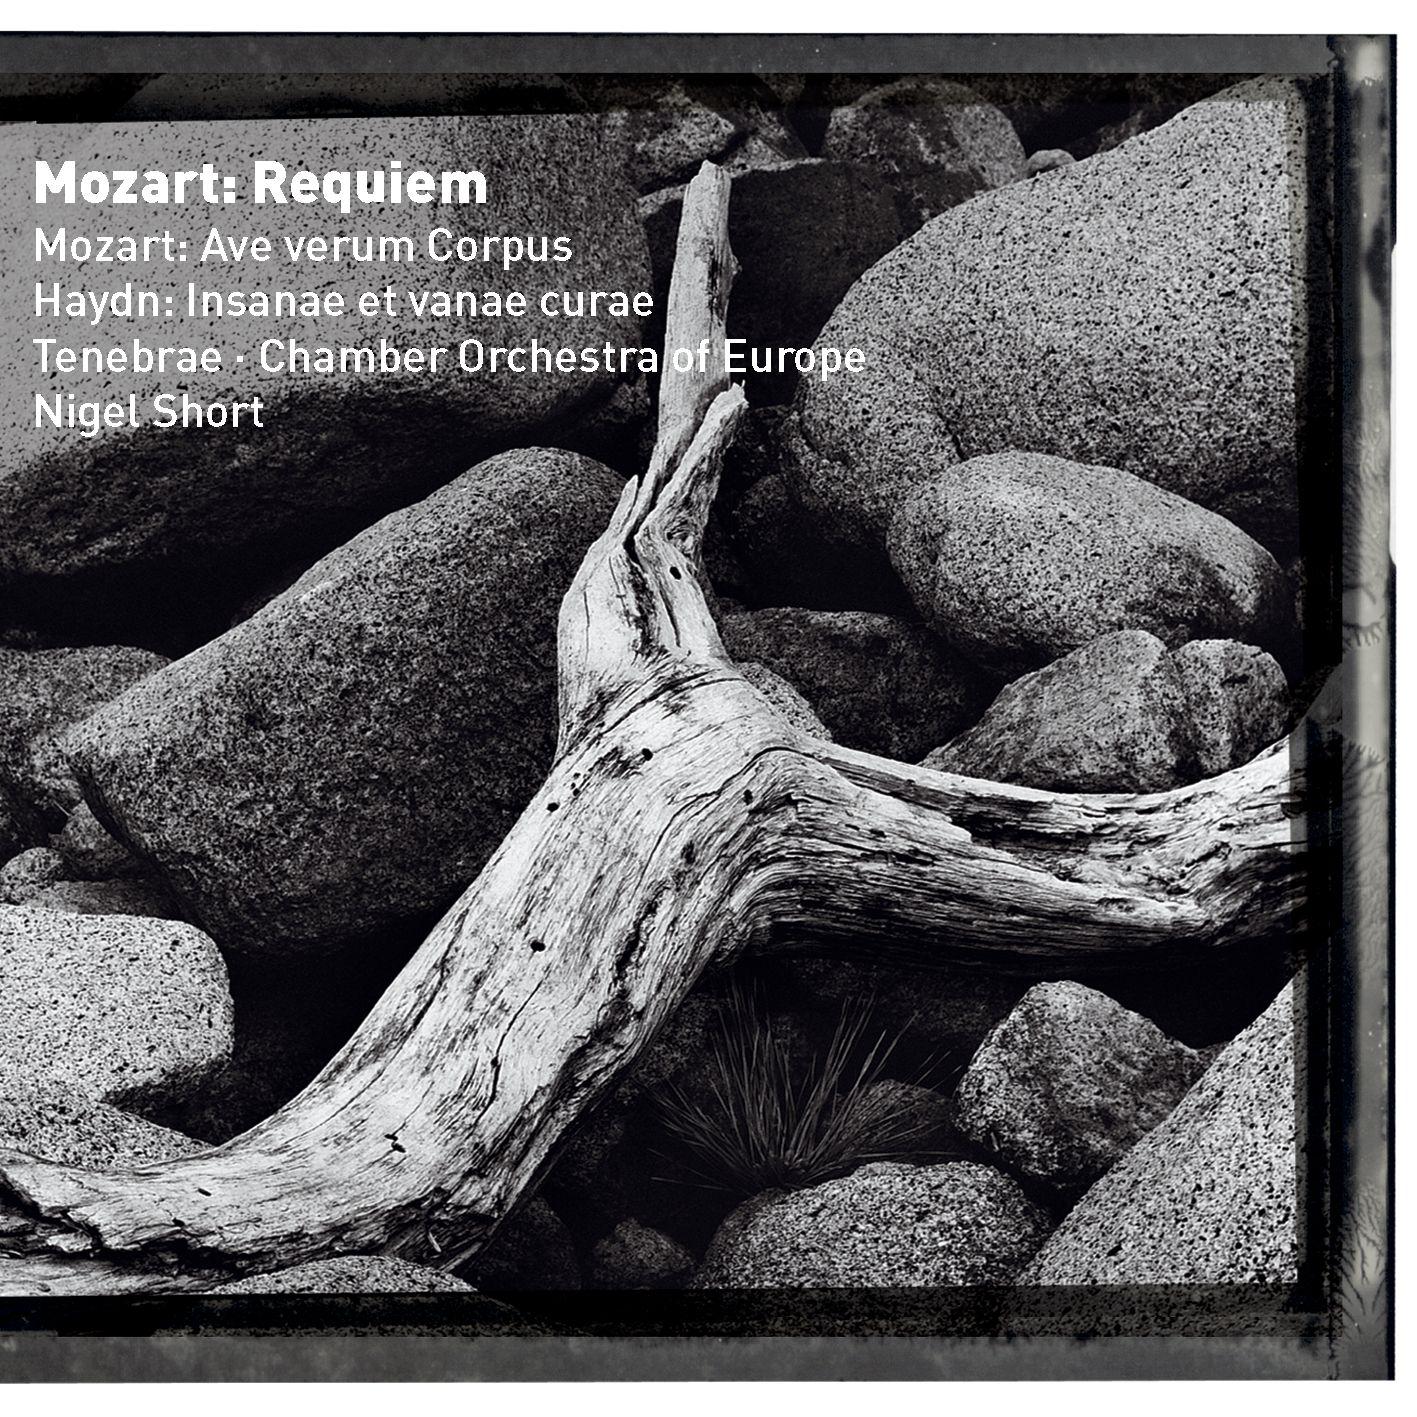 Mozart:Requiem in D minor K626 : I Introitus - Requiem aeternam